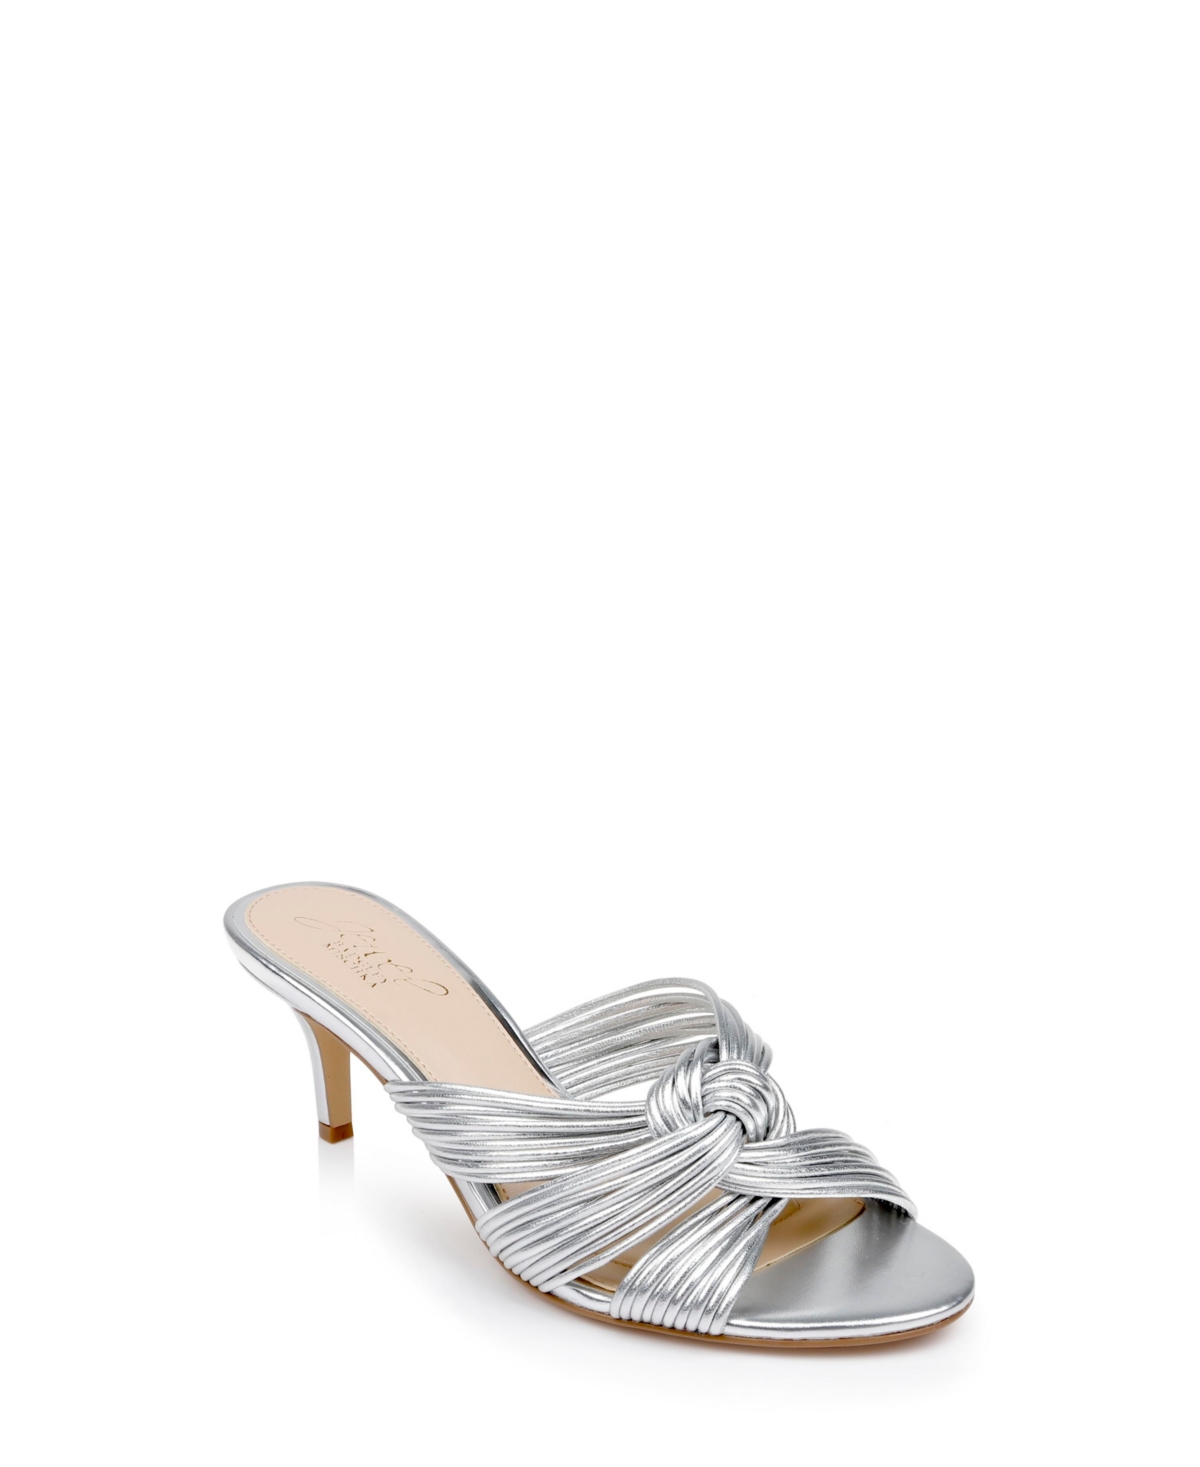 Women's Mia Evening Slide Sandals - Silver Metallic